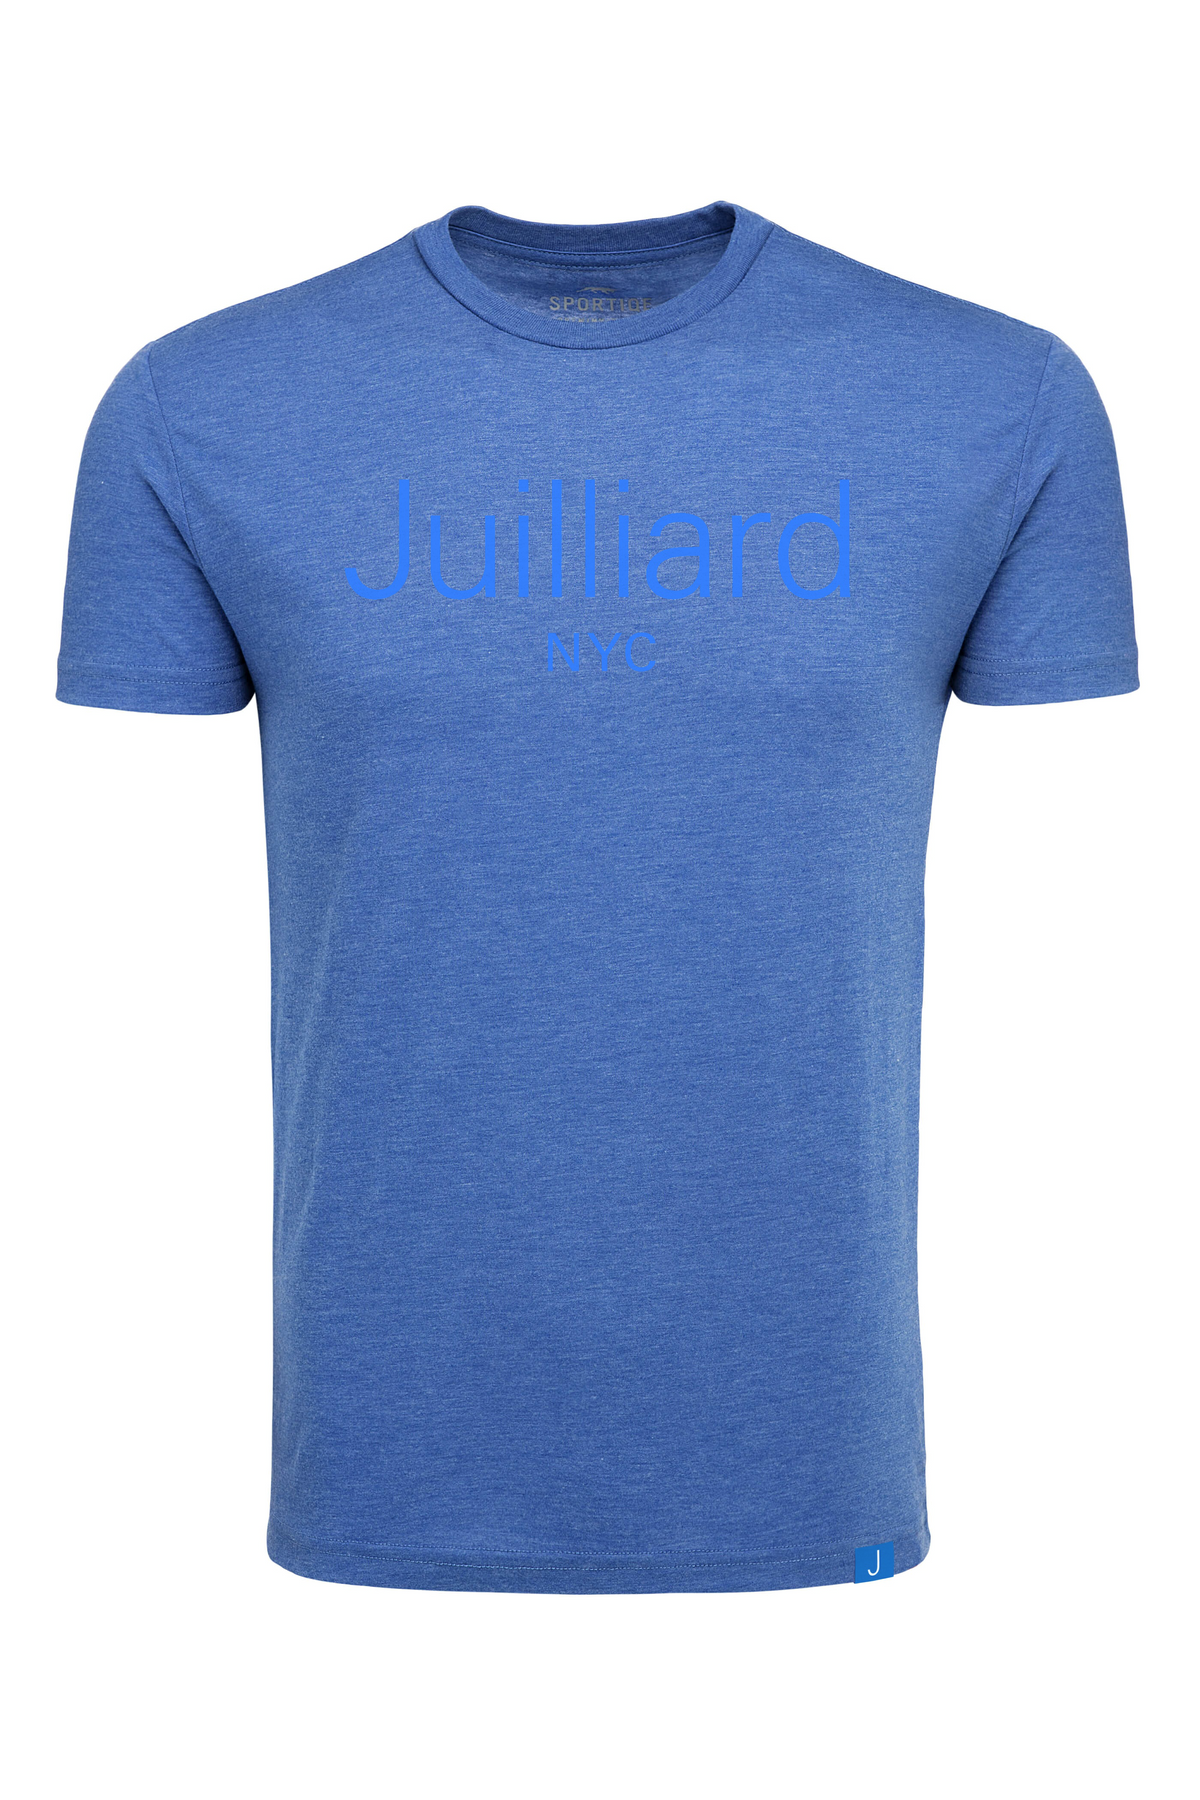 T-shirt: Juilliard NYC- Blue FINAL SALE CLEARANCE